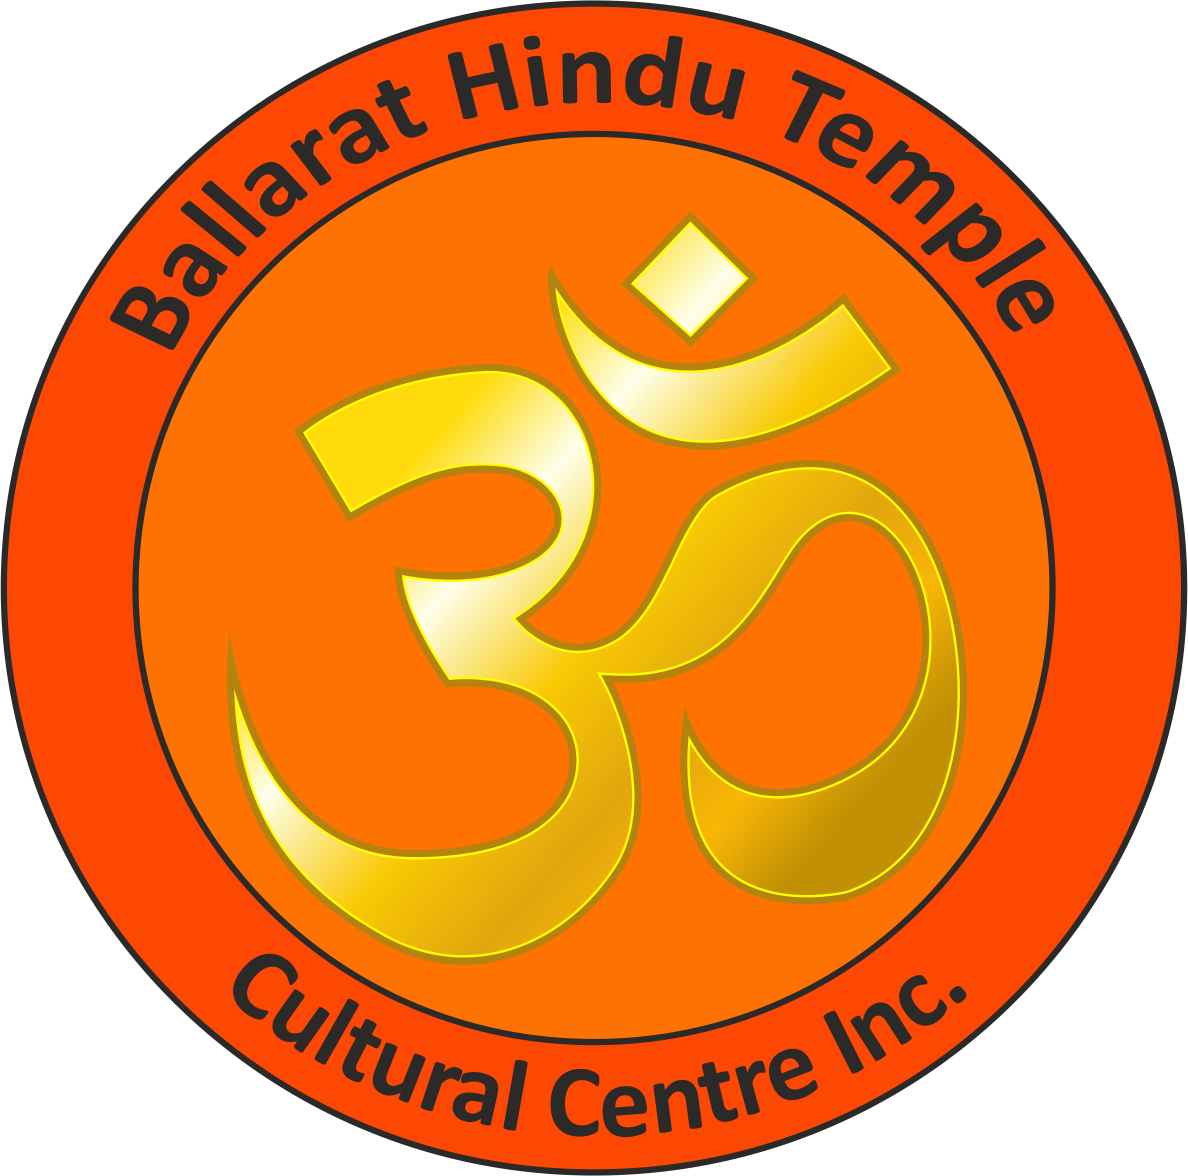 Ballarat Hindu Temple & Cultural Center